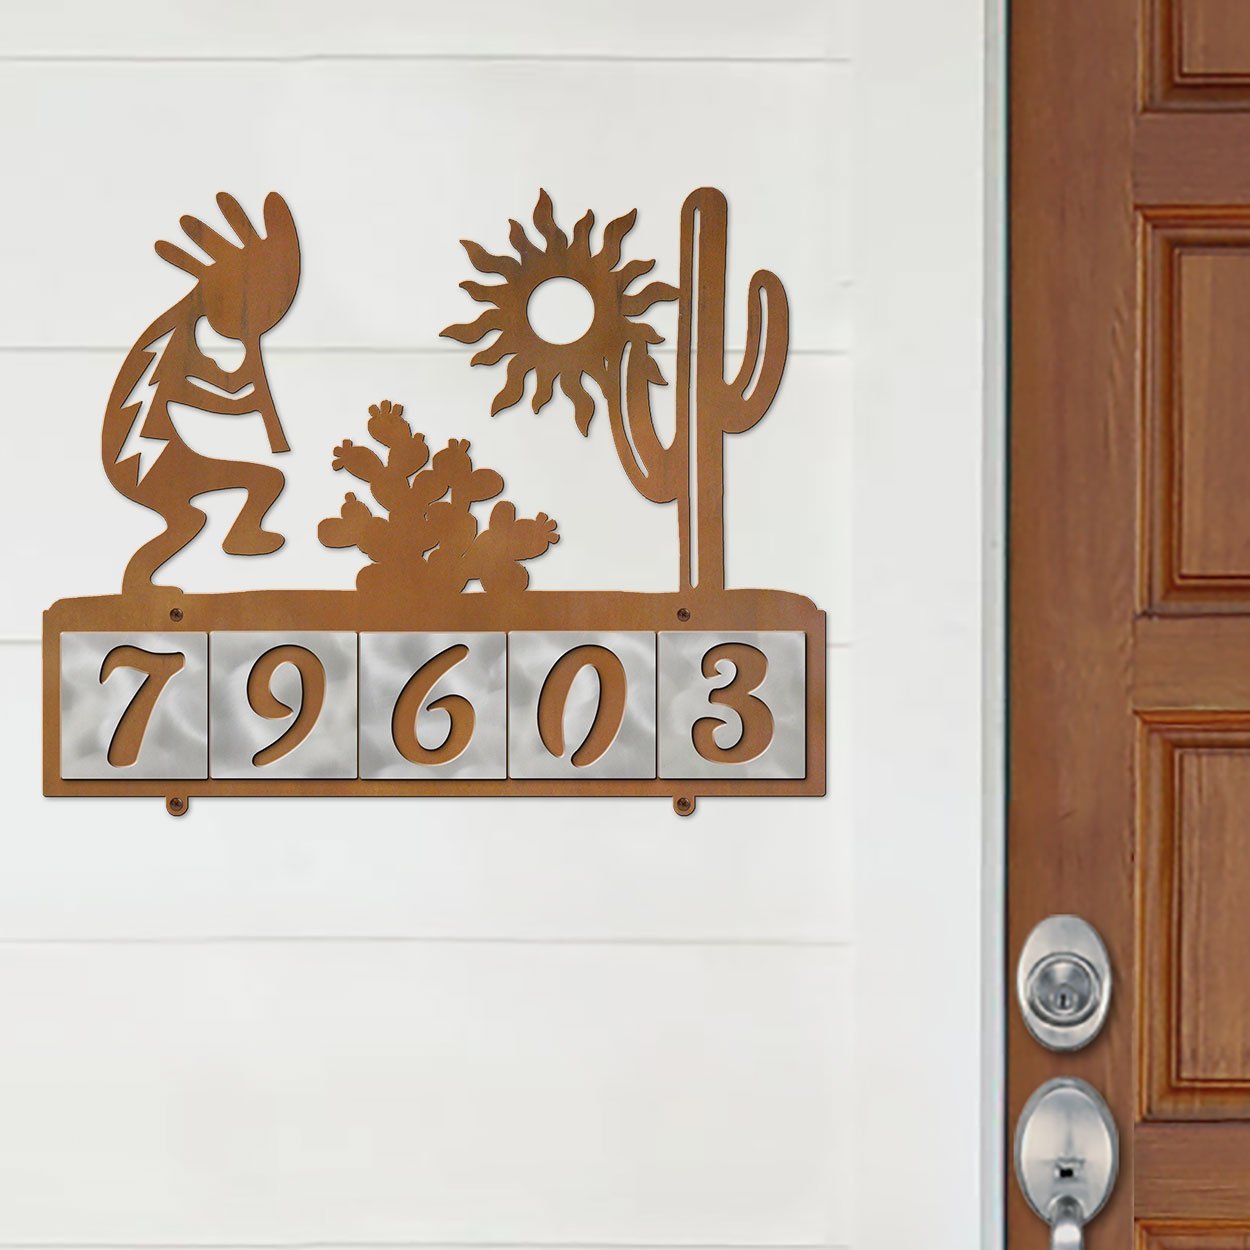 607155 - Kokopelli Desert Scene Design 5-Digit Horizontal 4-inch Tile Outdoor House Numbers